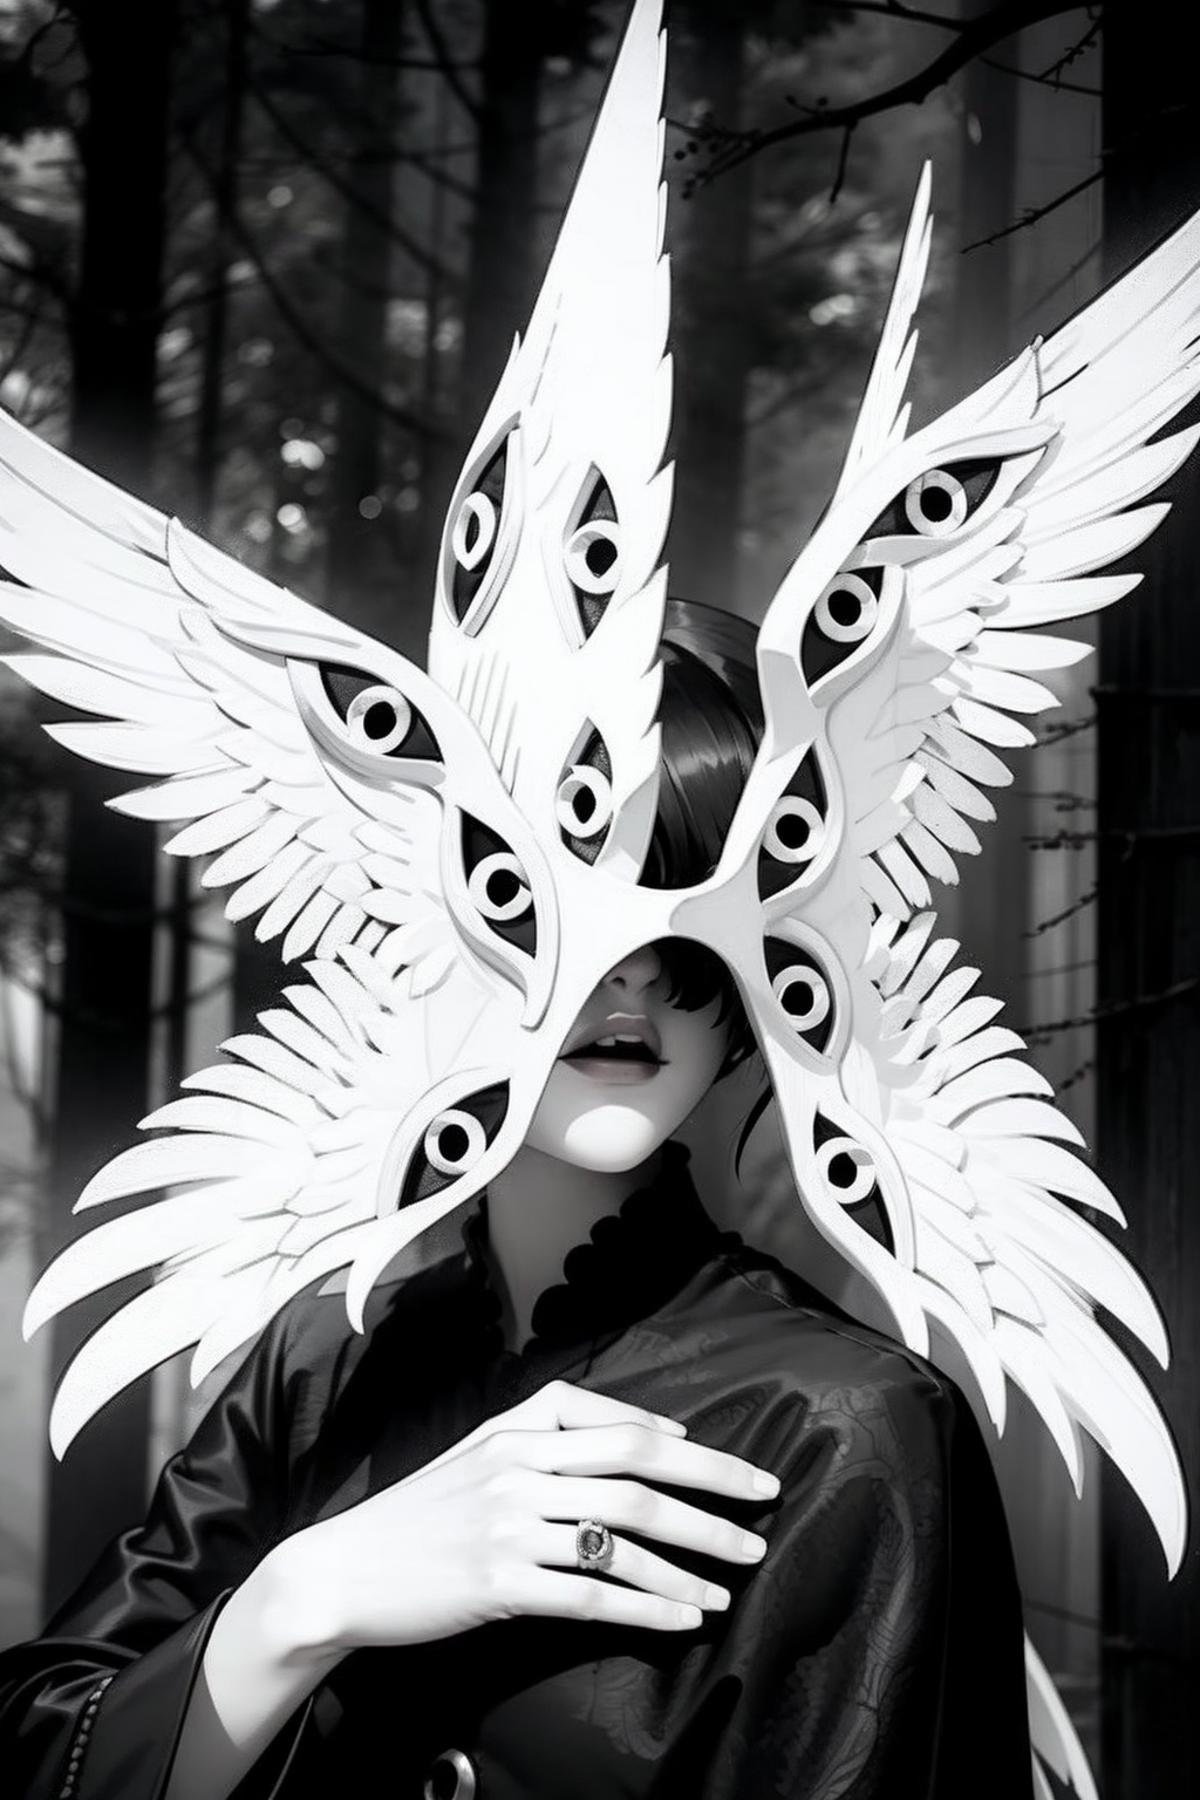 Biblical Angel Mask/Helmet image by freckledvixon